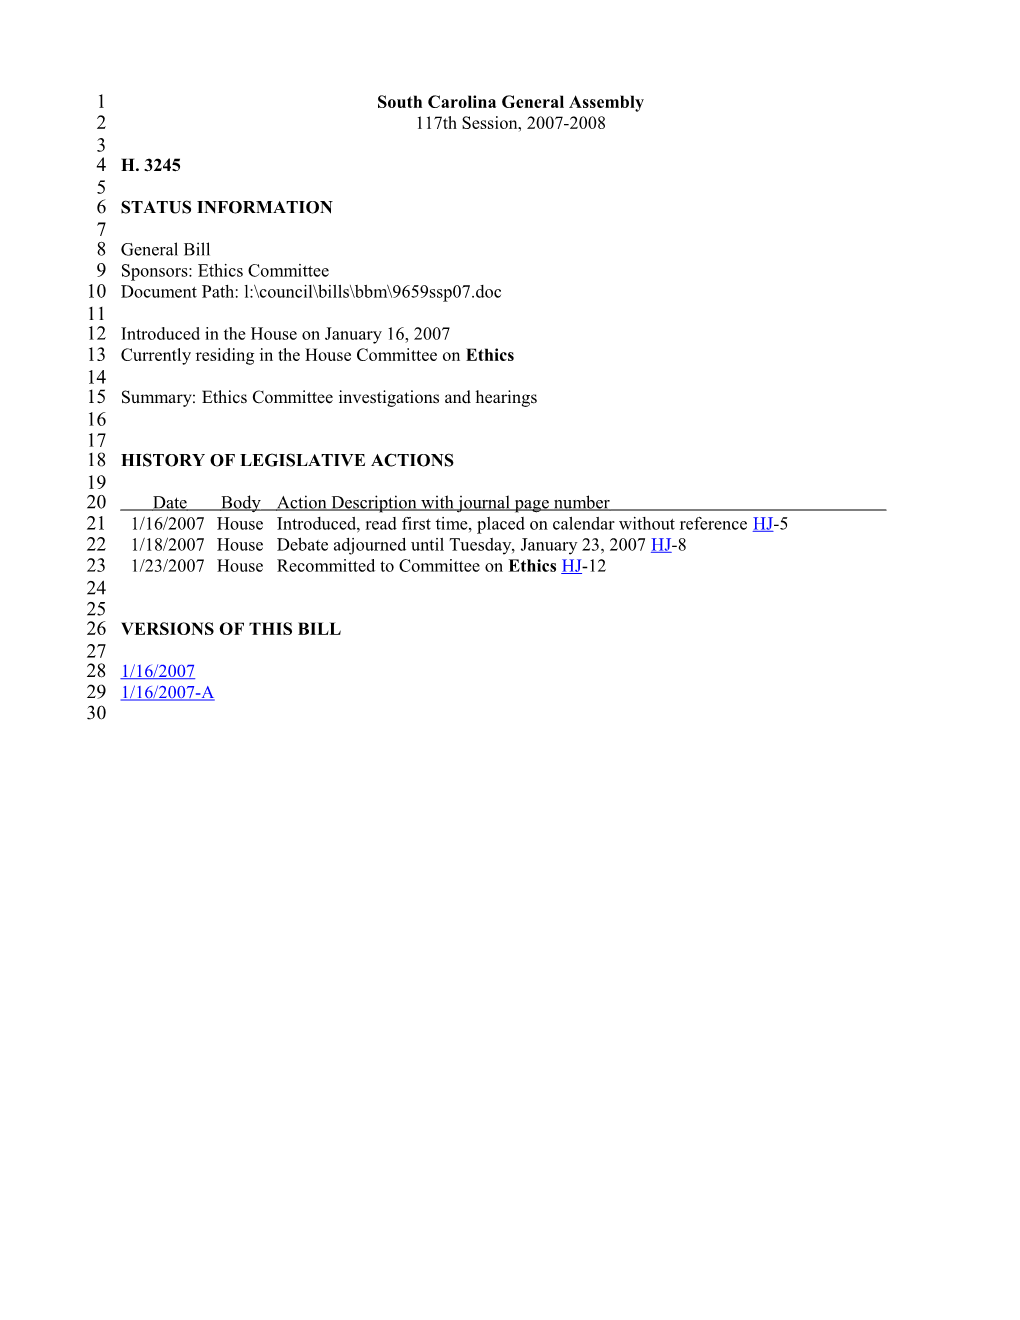 2007-2008 Bill 3245: Ethics Committee Investigations and Hearings - South Carolina Legislature